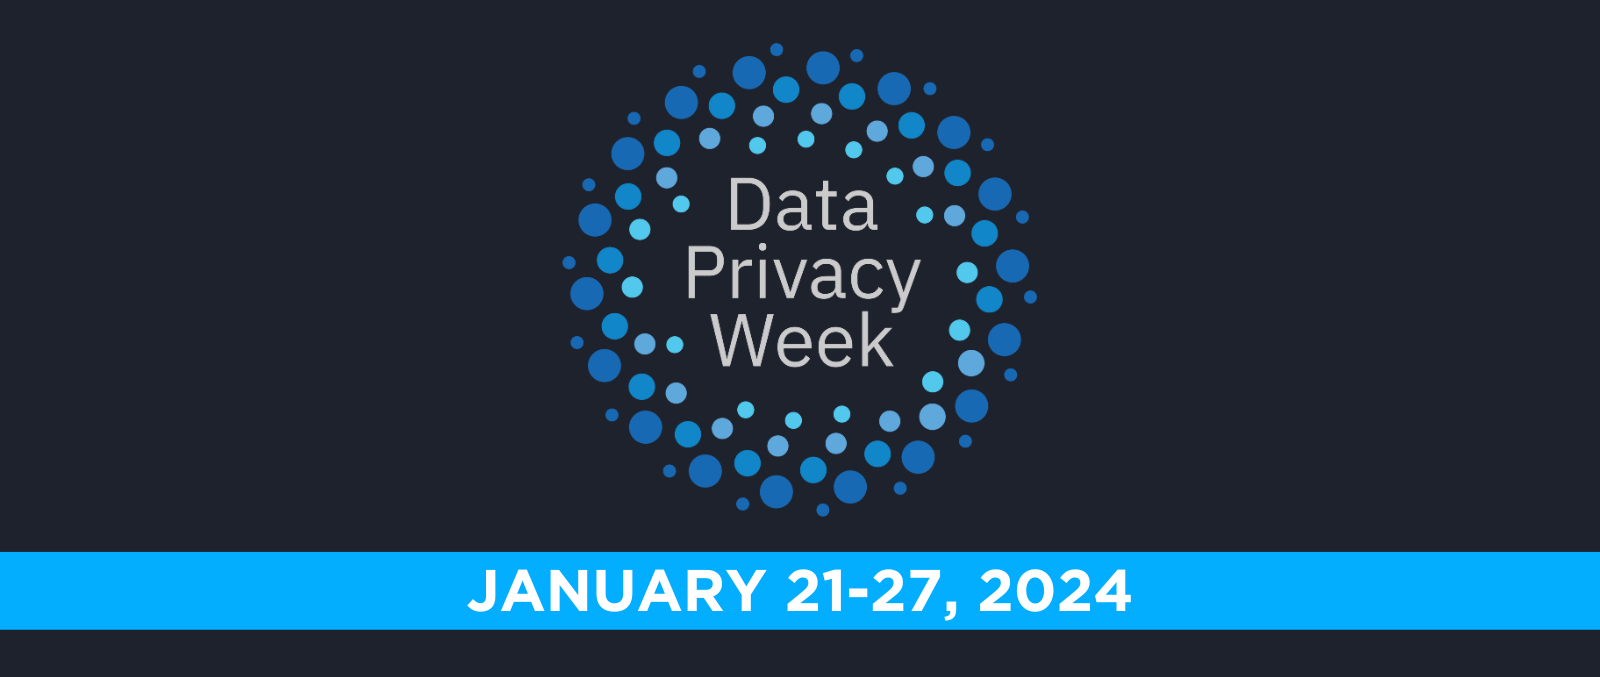 Data Privacy Week | January 21-27, 2024